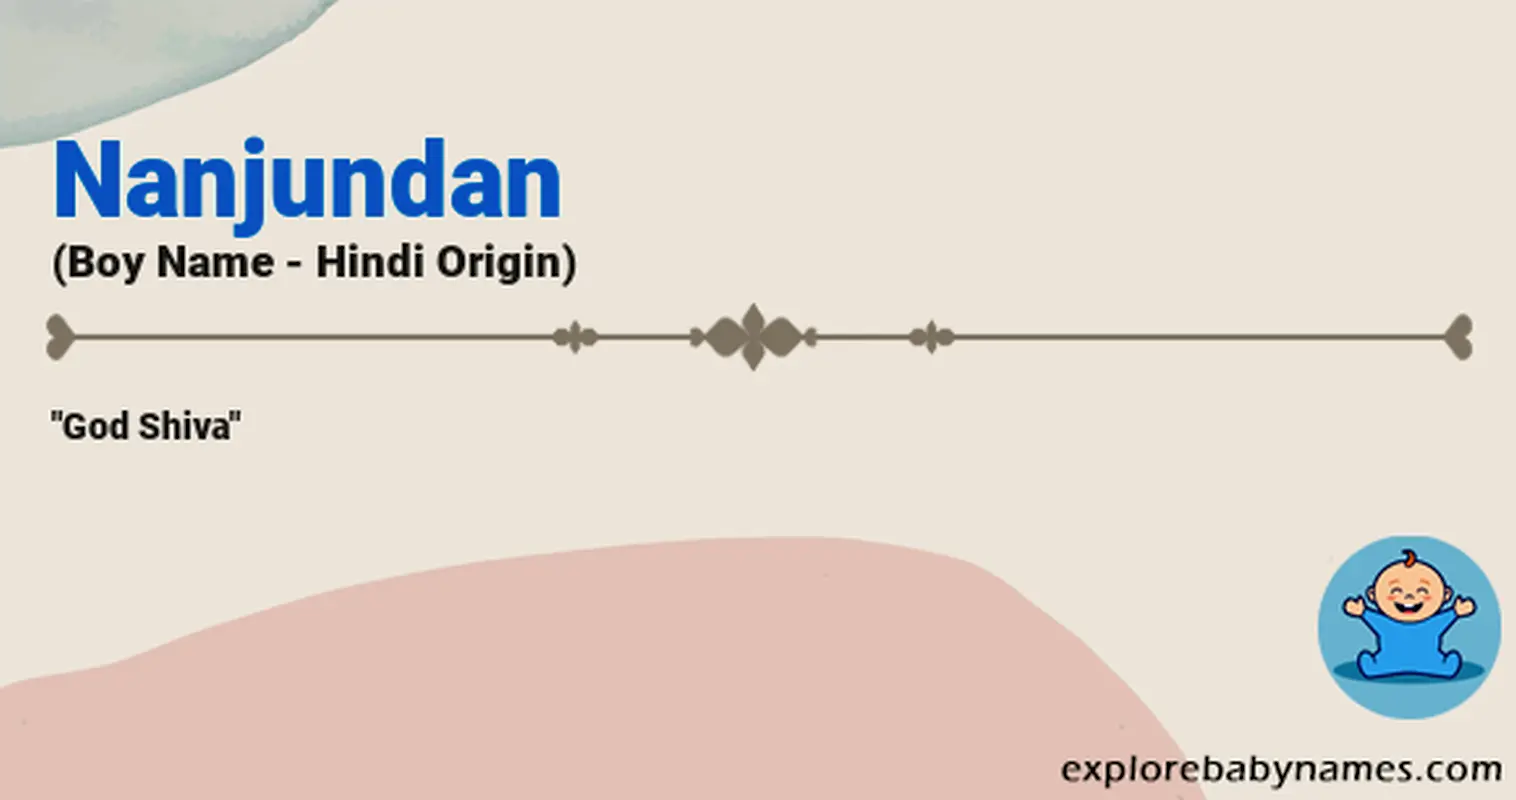 Meaning of Nanjundan